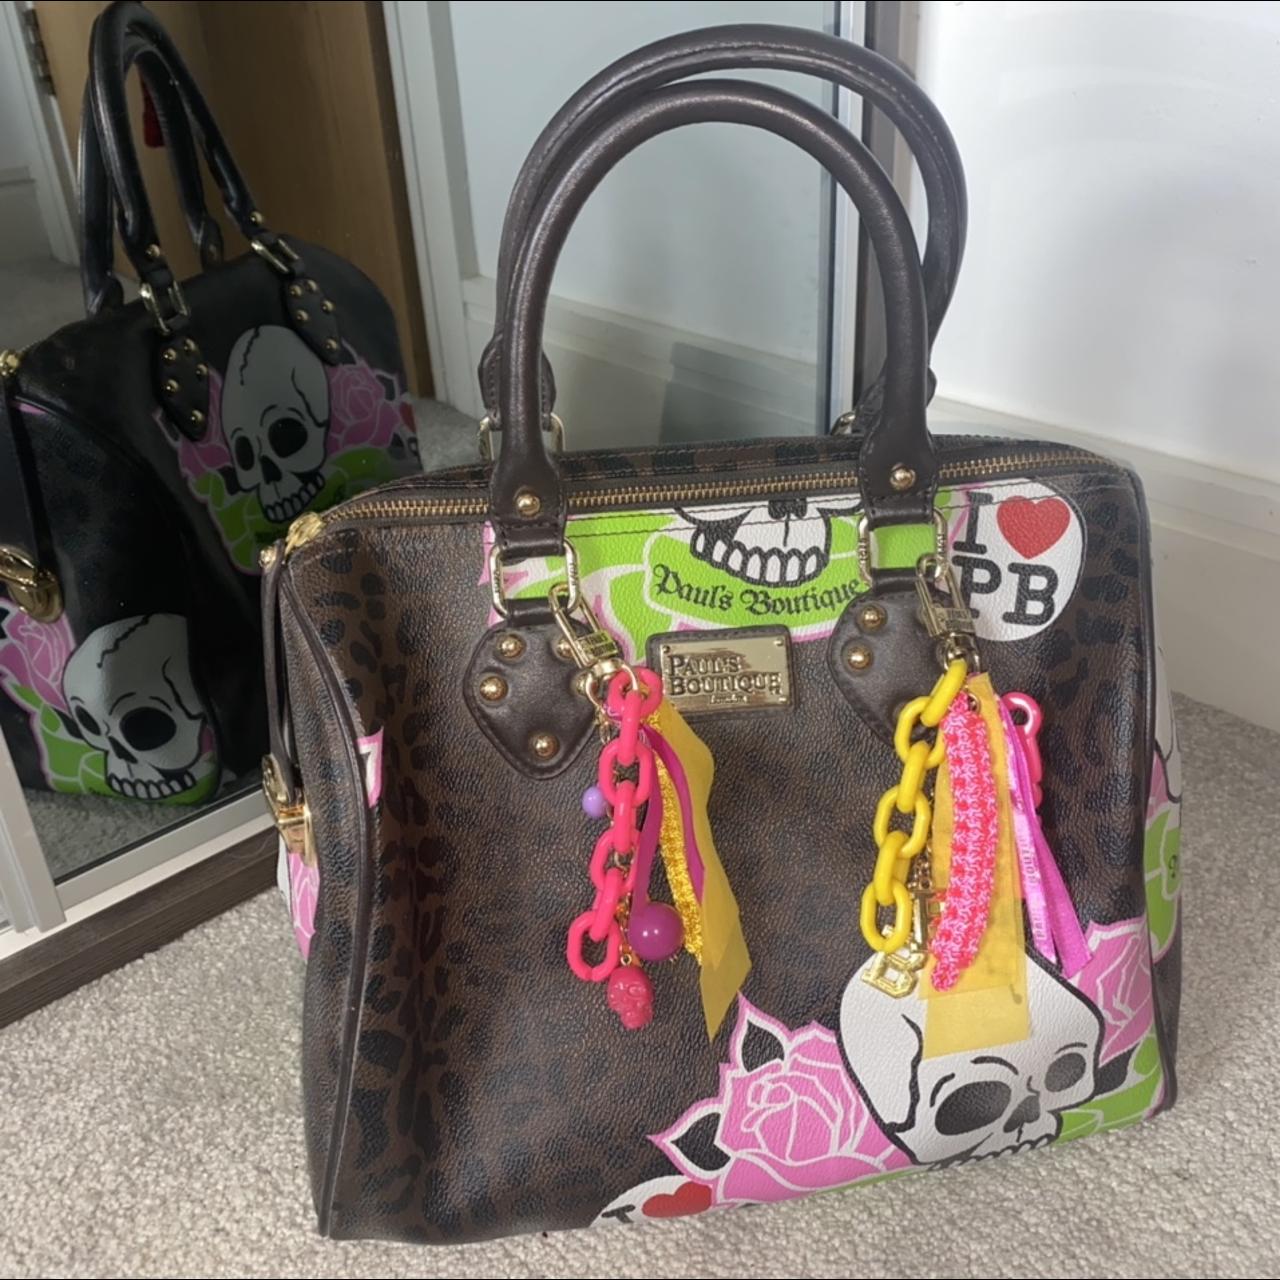 Authentic Paul’s Boutique 00’s bag with amazing